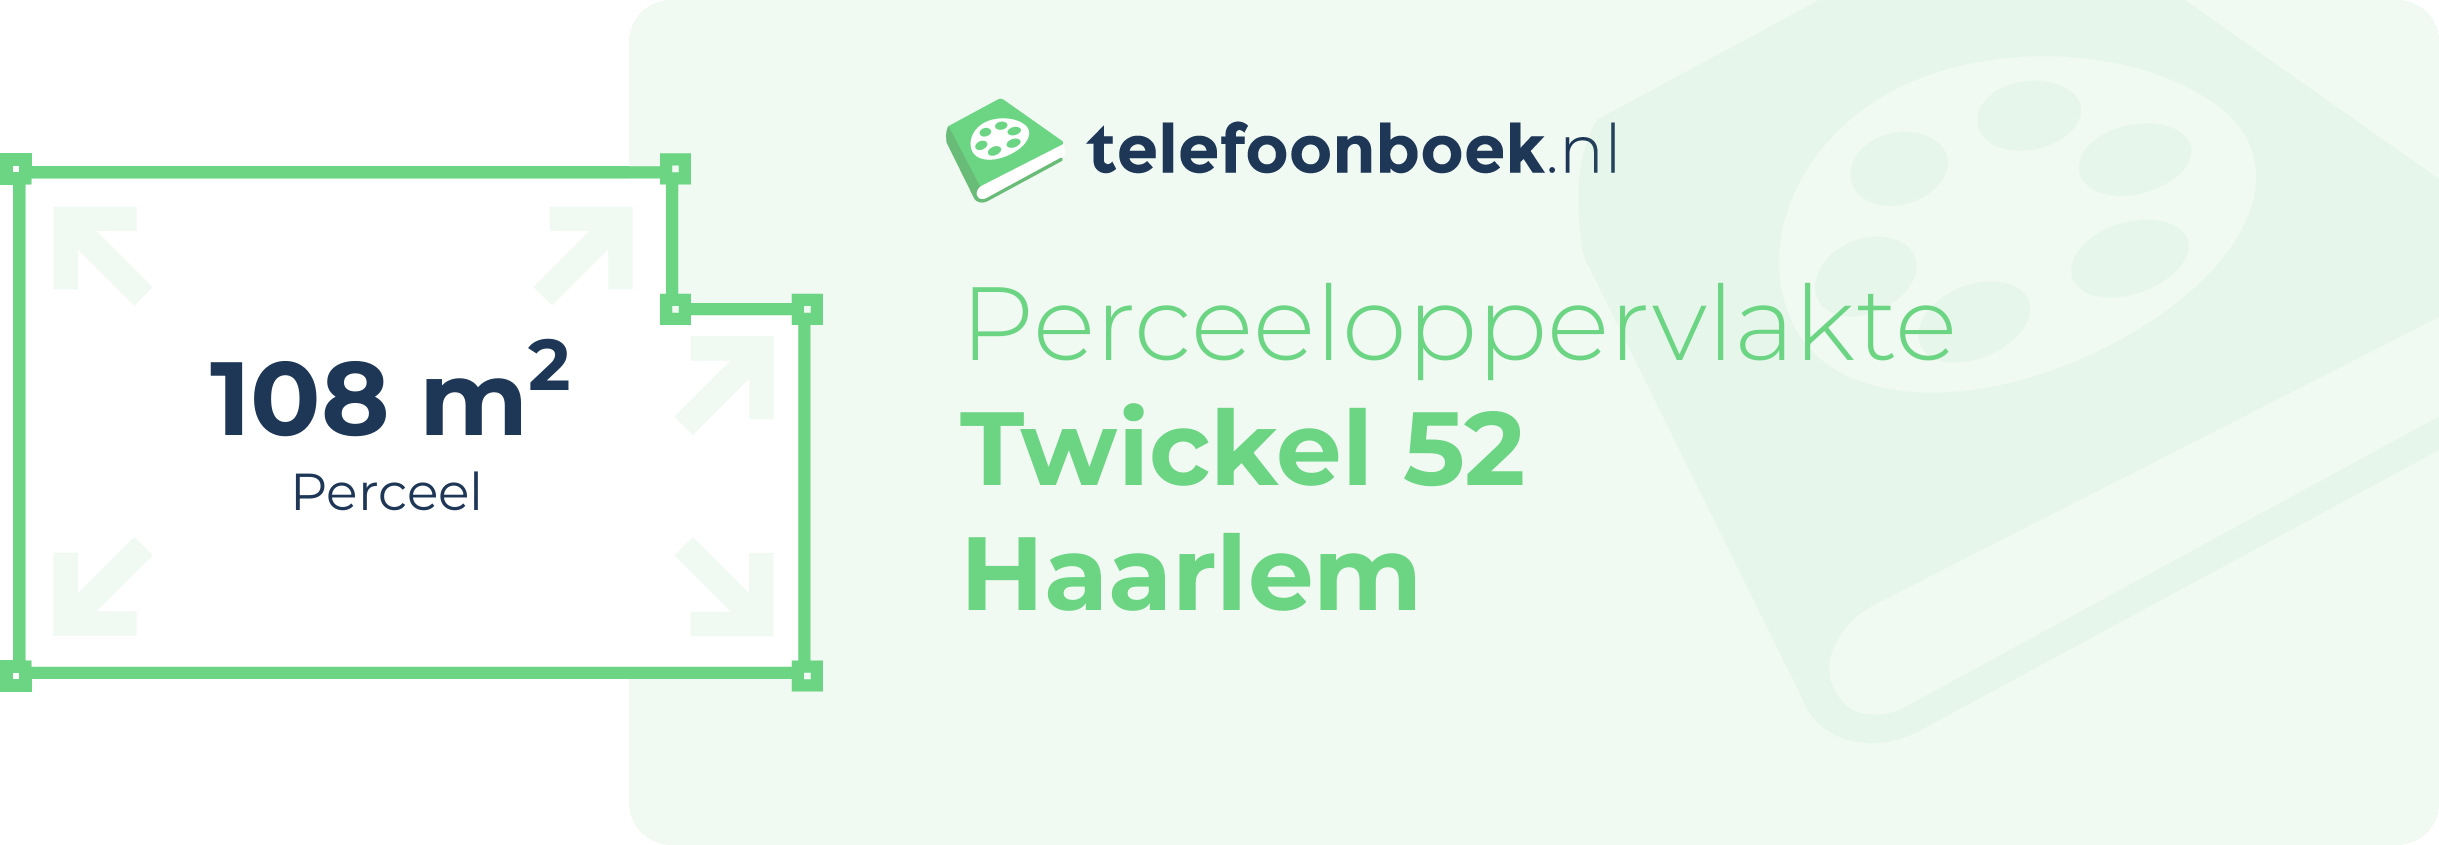 Perceeloppervlakte Twickel 52 Haarlem